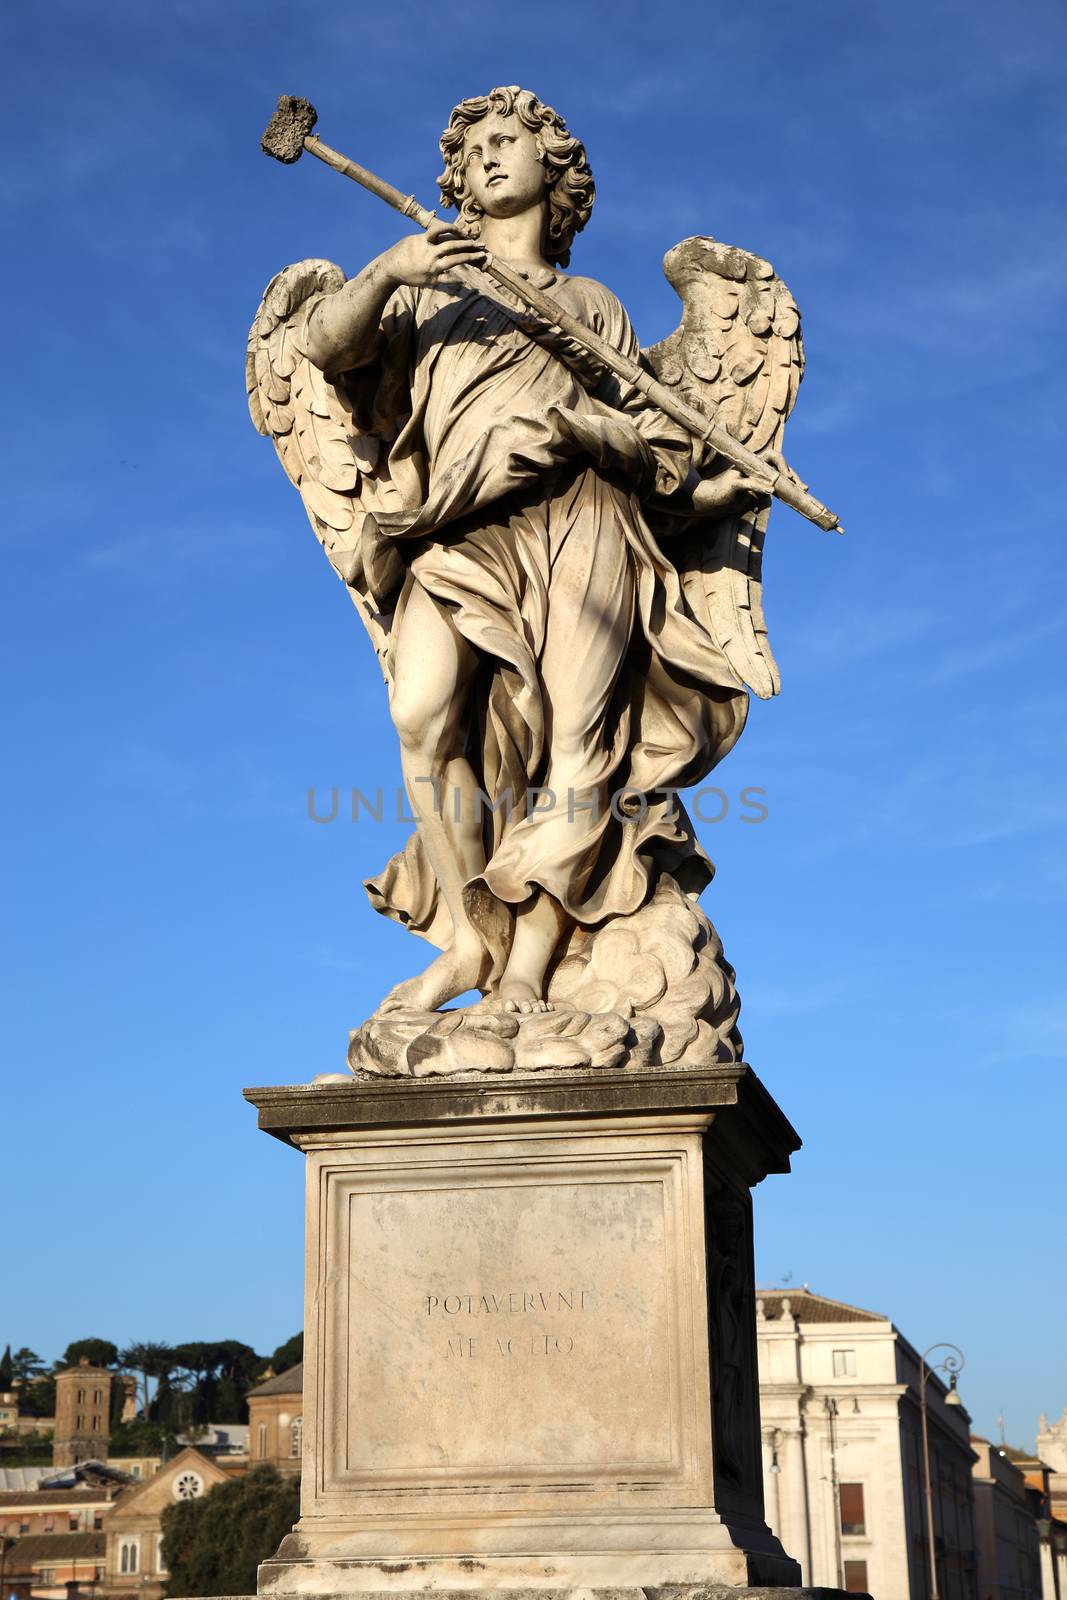 statue Potaverunt me aceto on bridge Castel Sant' Angelo, Rome by vladacanon